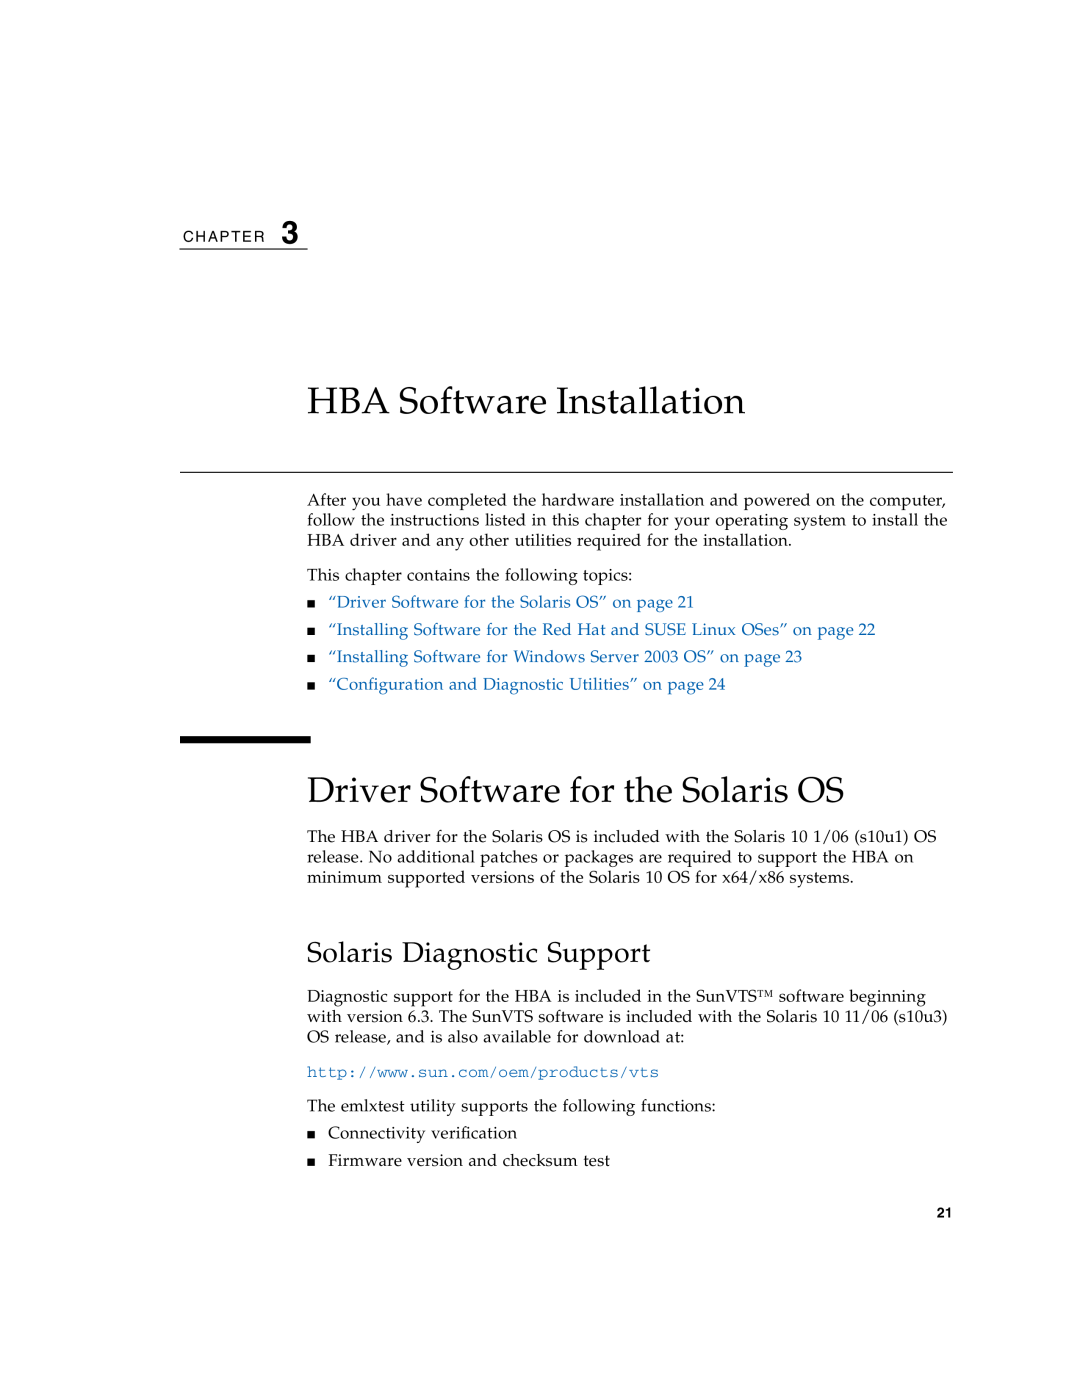 Sun Microsystems SG-XPCIE2FCGBE-E-Z manual HBA Software Installation, Driver Software for the Solaris OS 